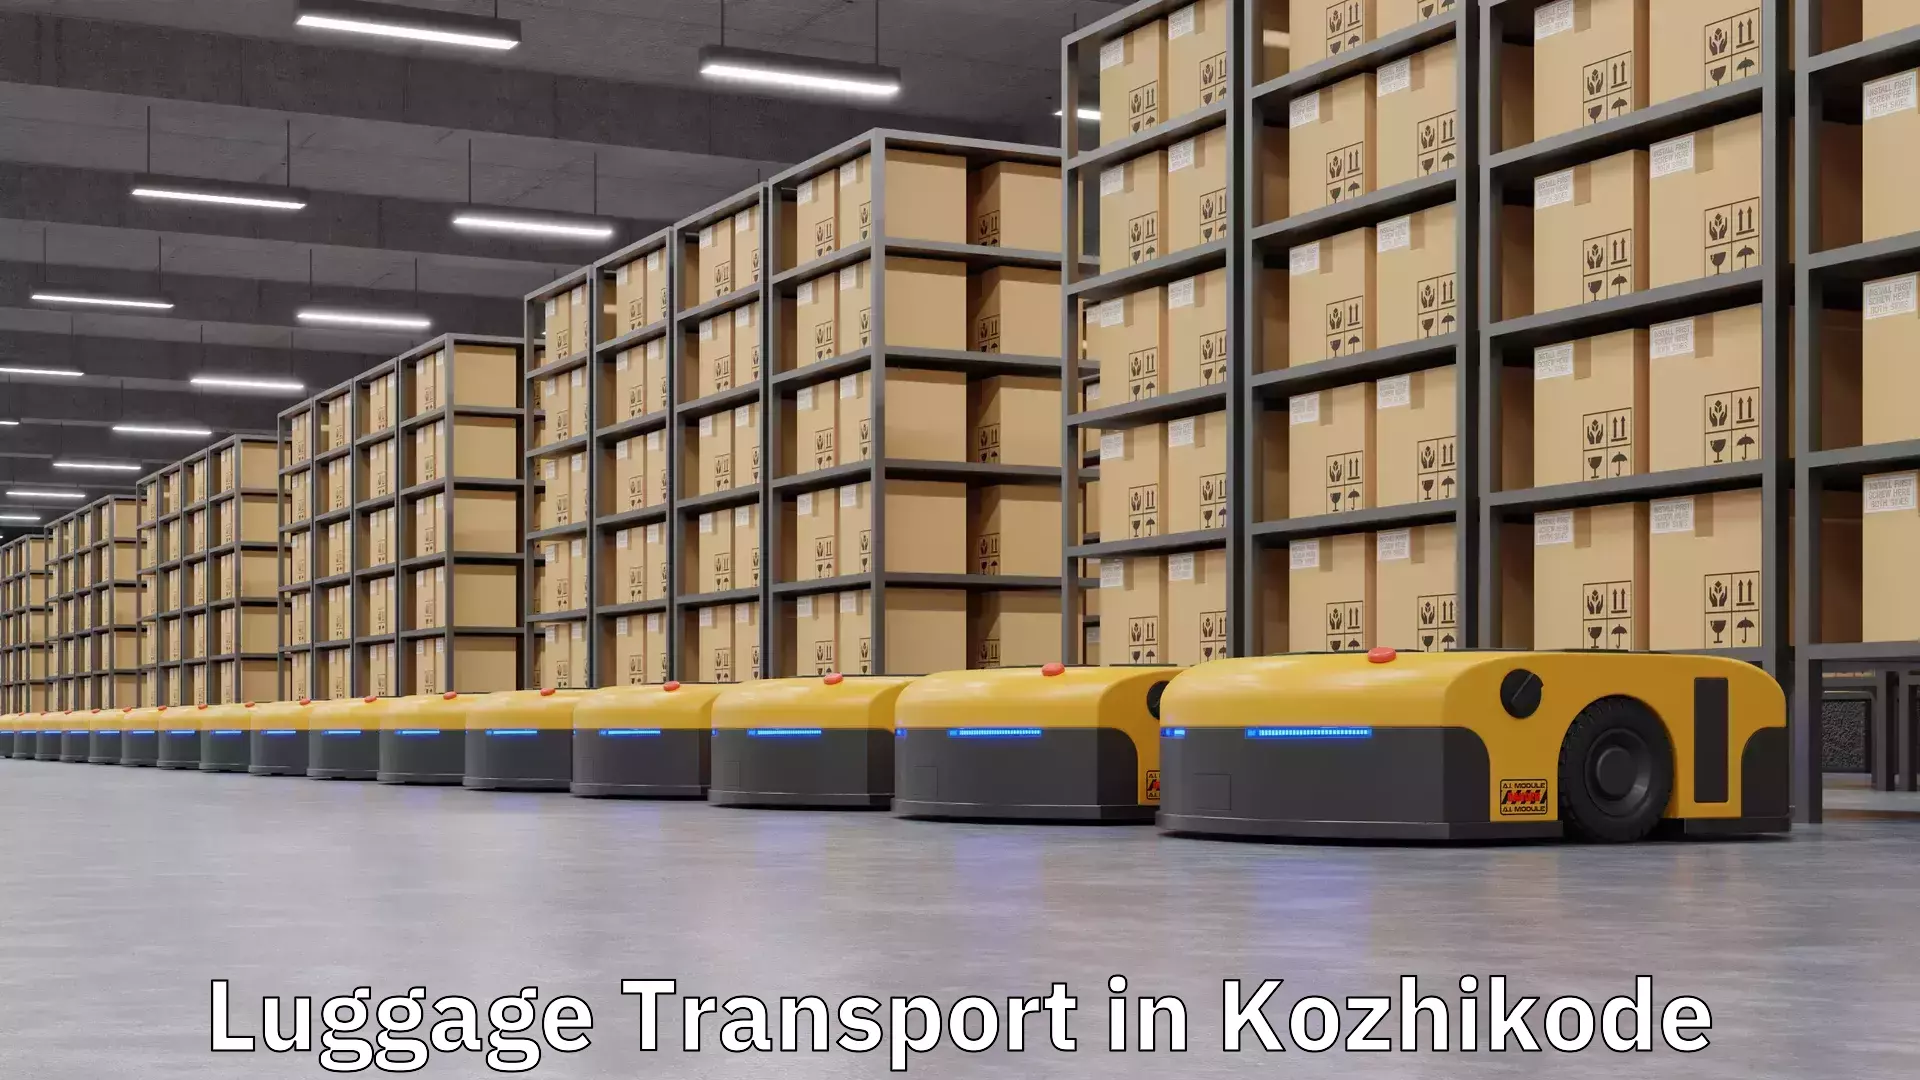 Baggage transport network in Kozhikode